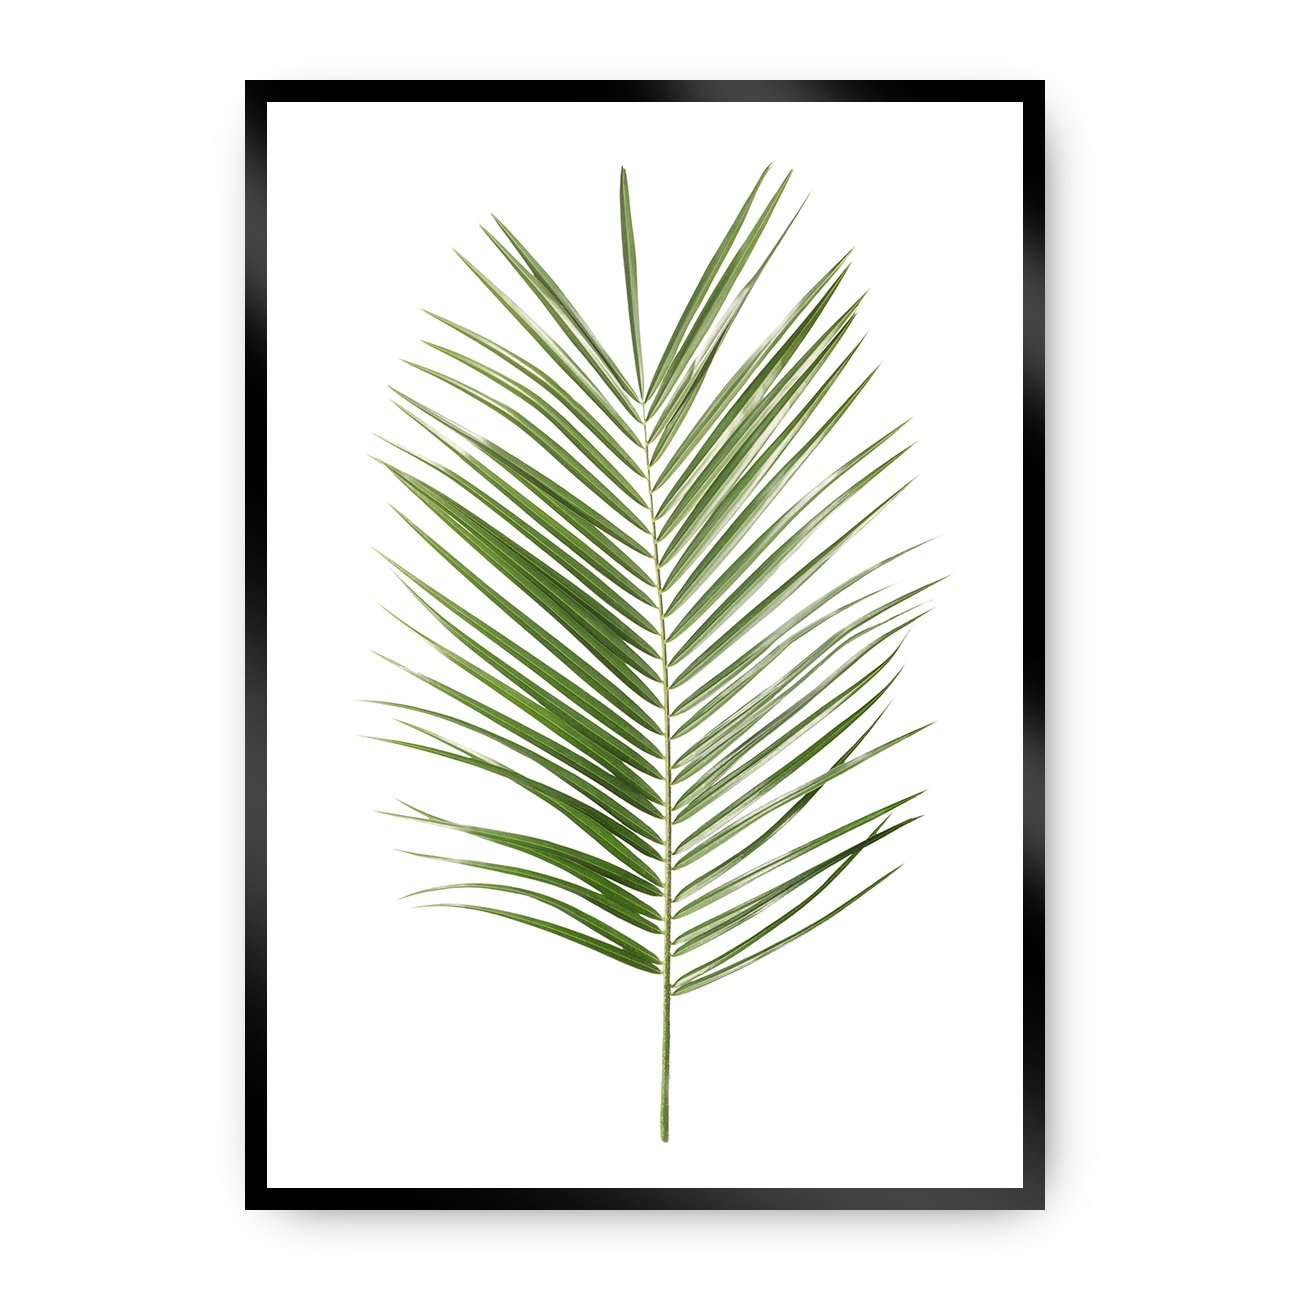 Dekoria Plakát Palm Leaf Green, 70 x 100 cm, Vybrat rám: Černý